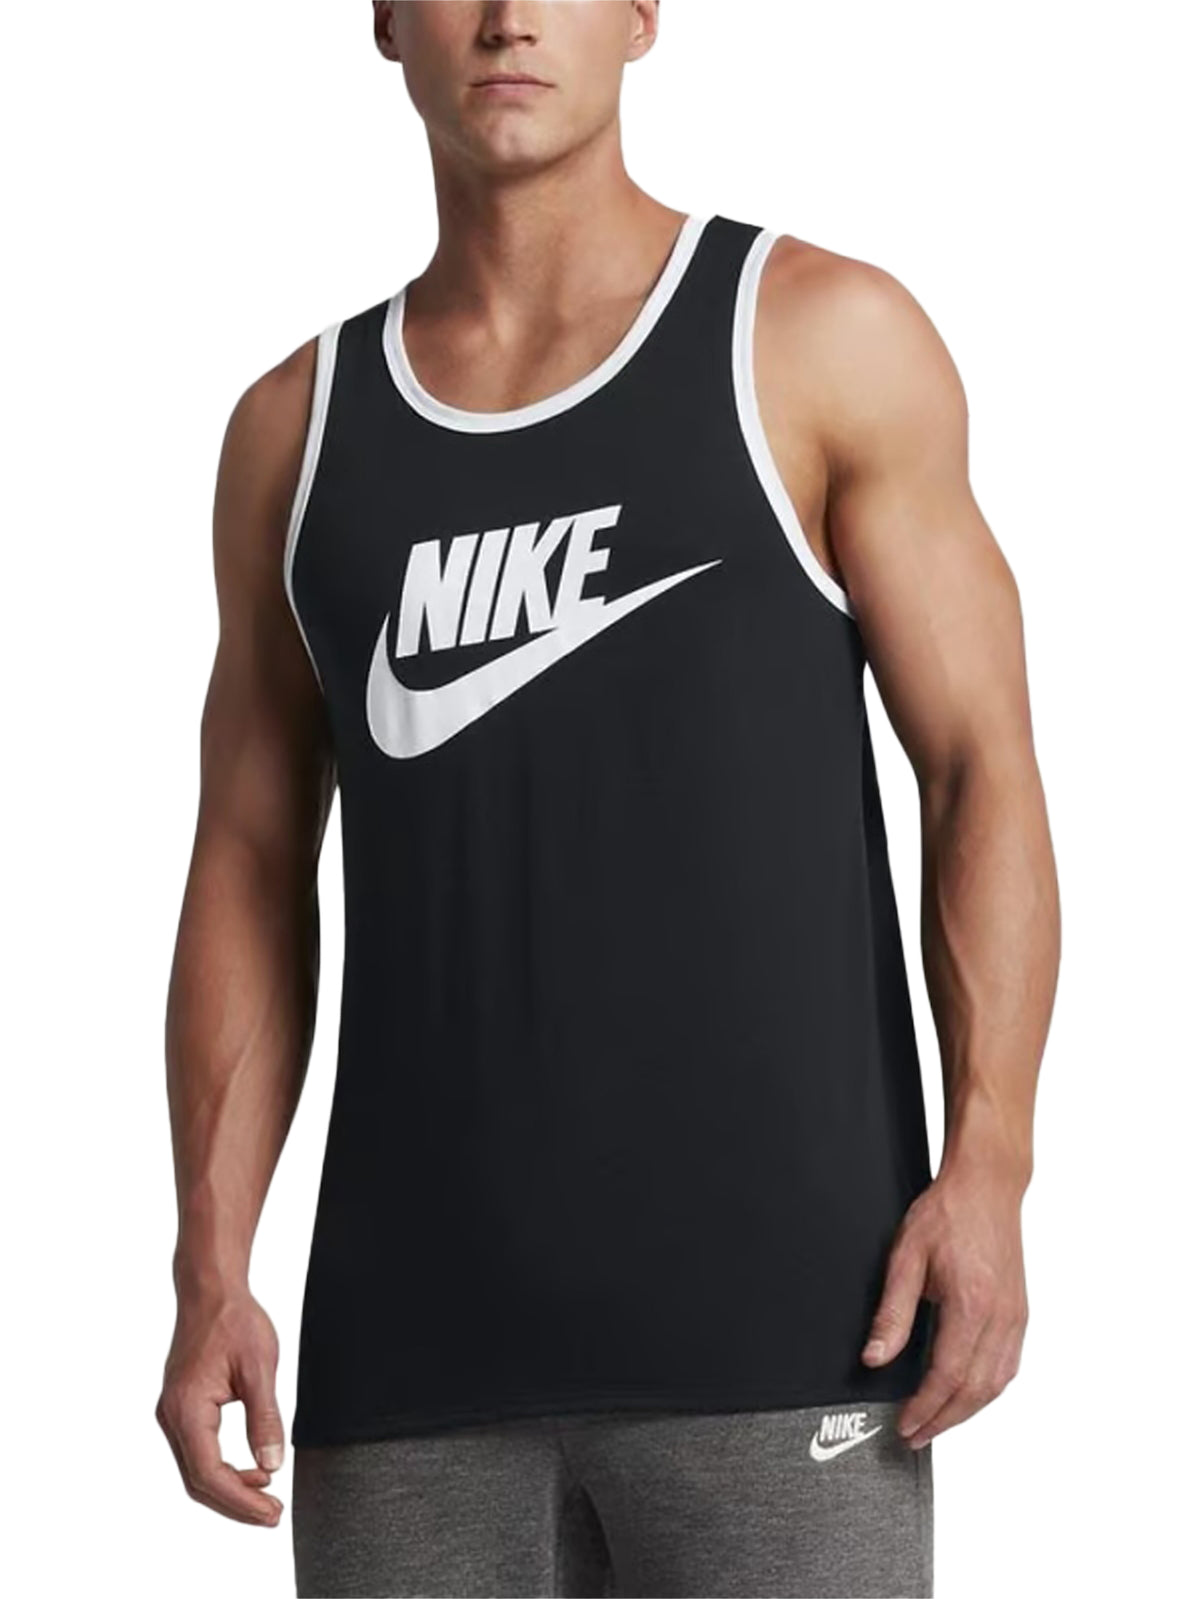 NIKE_VEST_779234 Nike | Mens Ace Logo Vest NIKE RAWDENIM